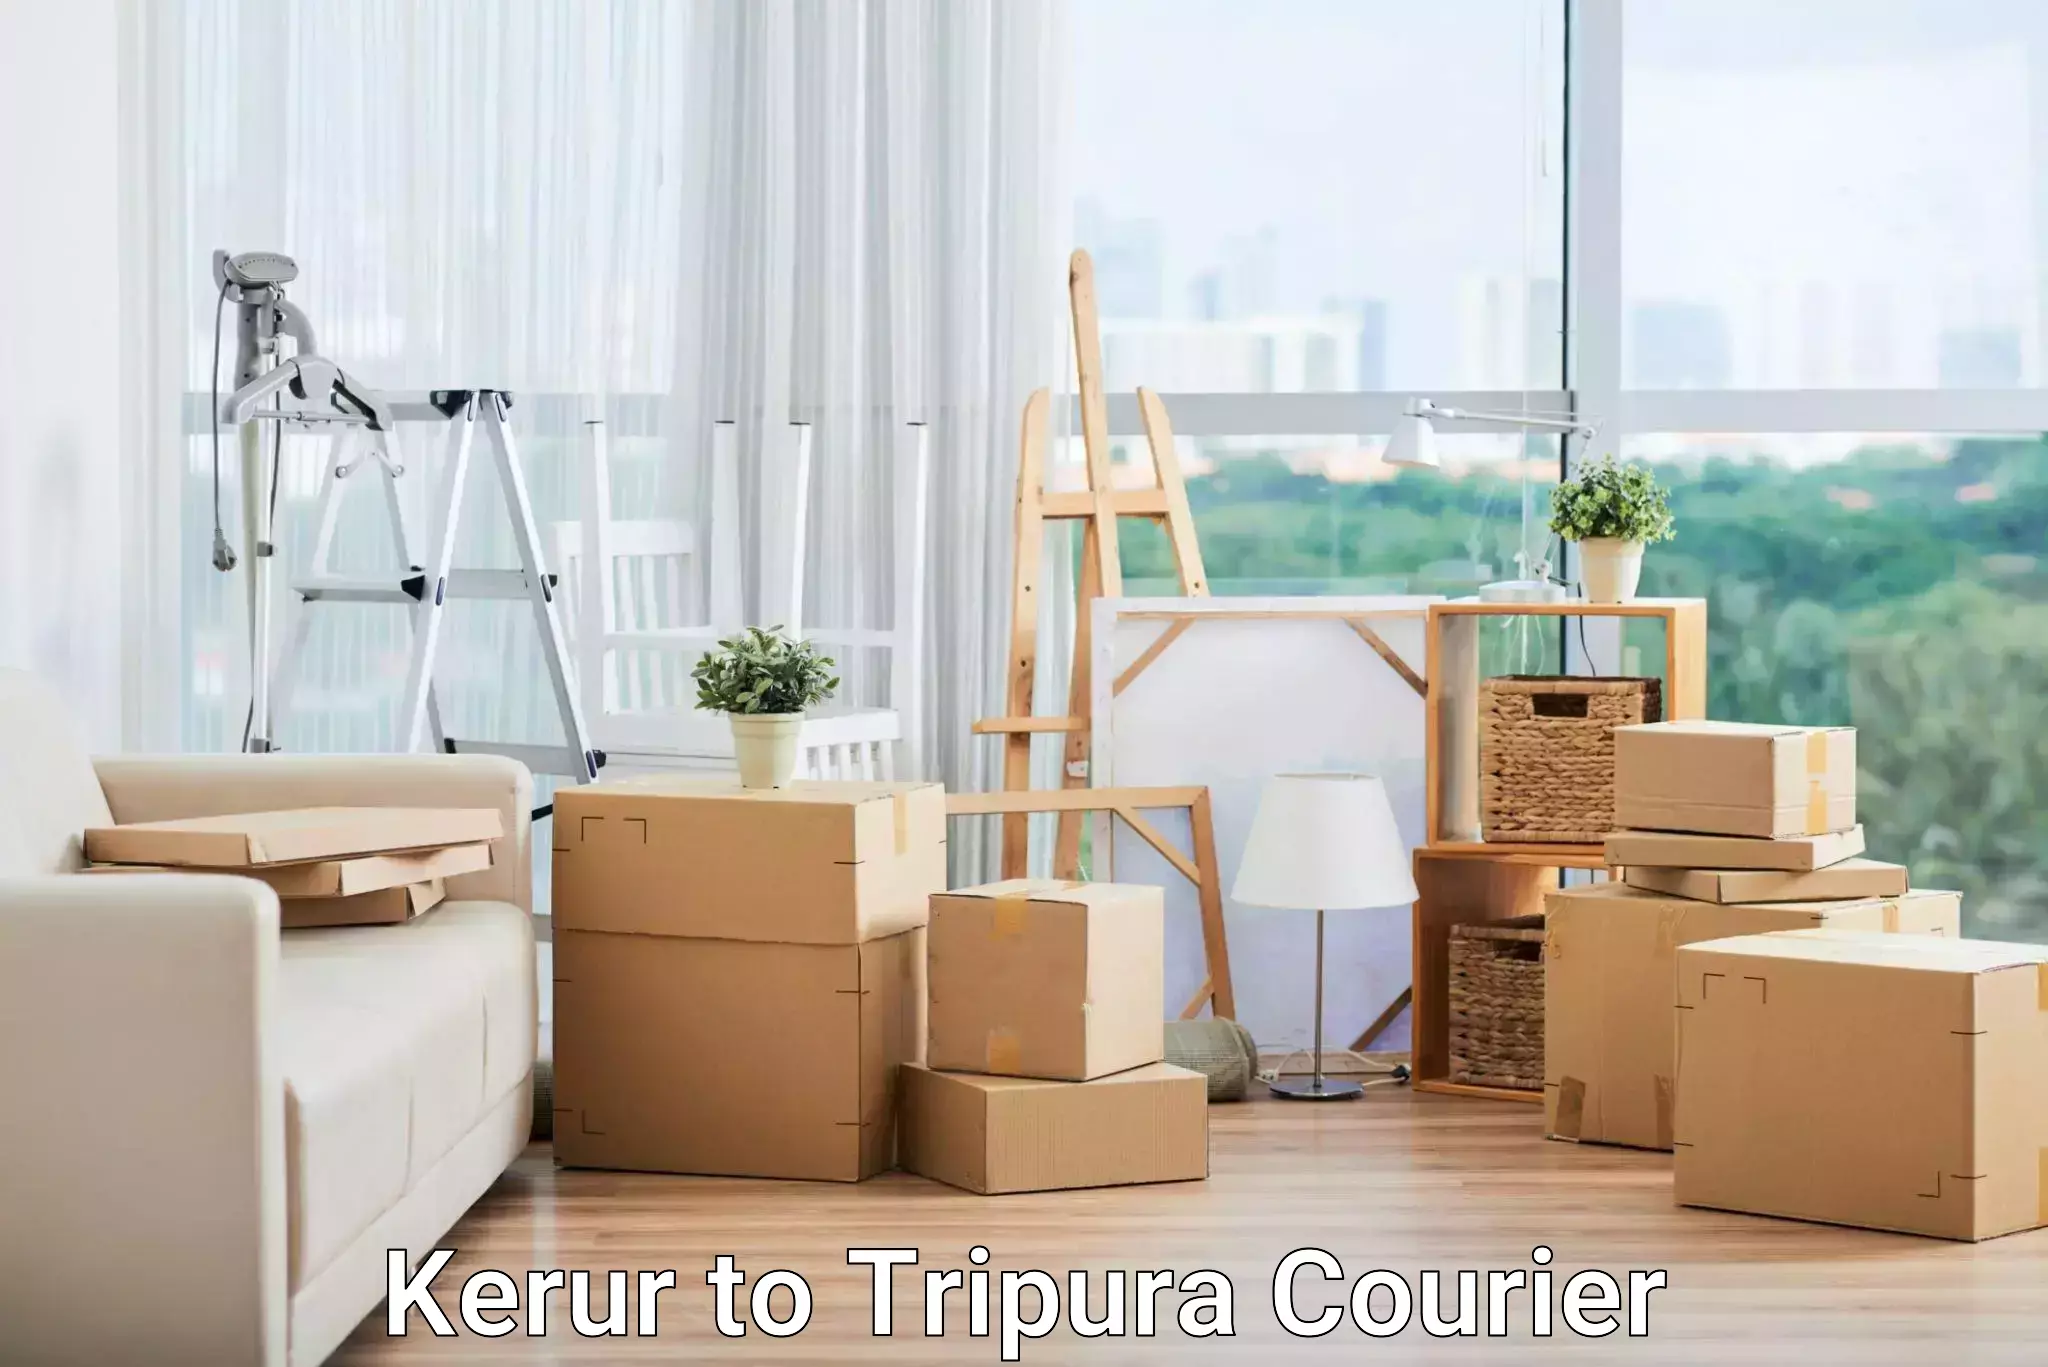 Courier service partnerships Kerur to Tripura